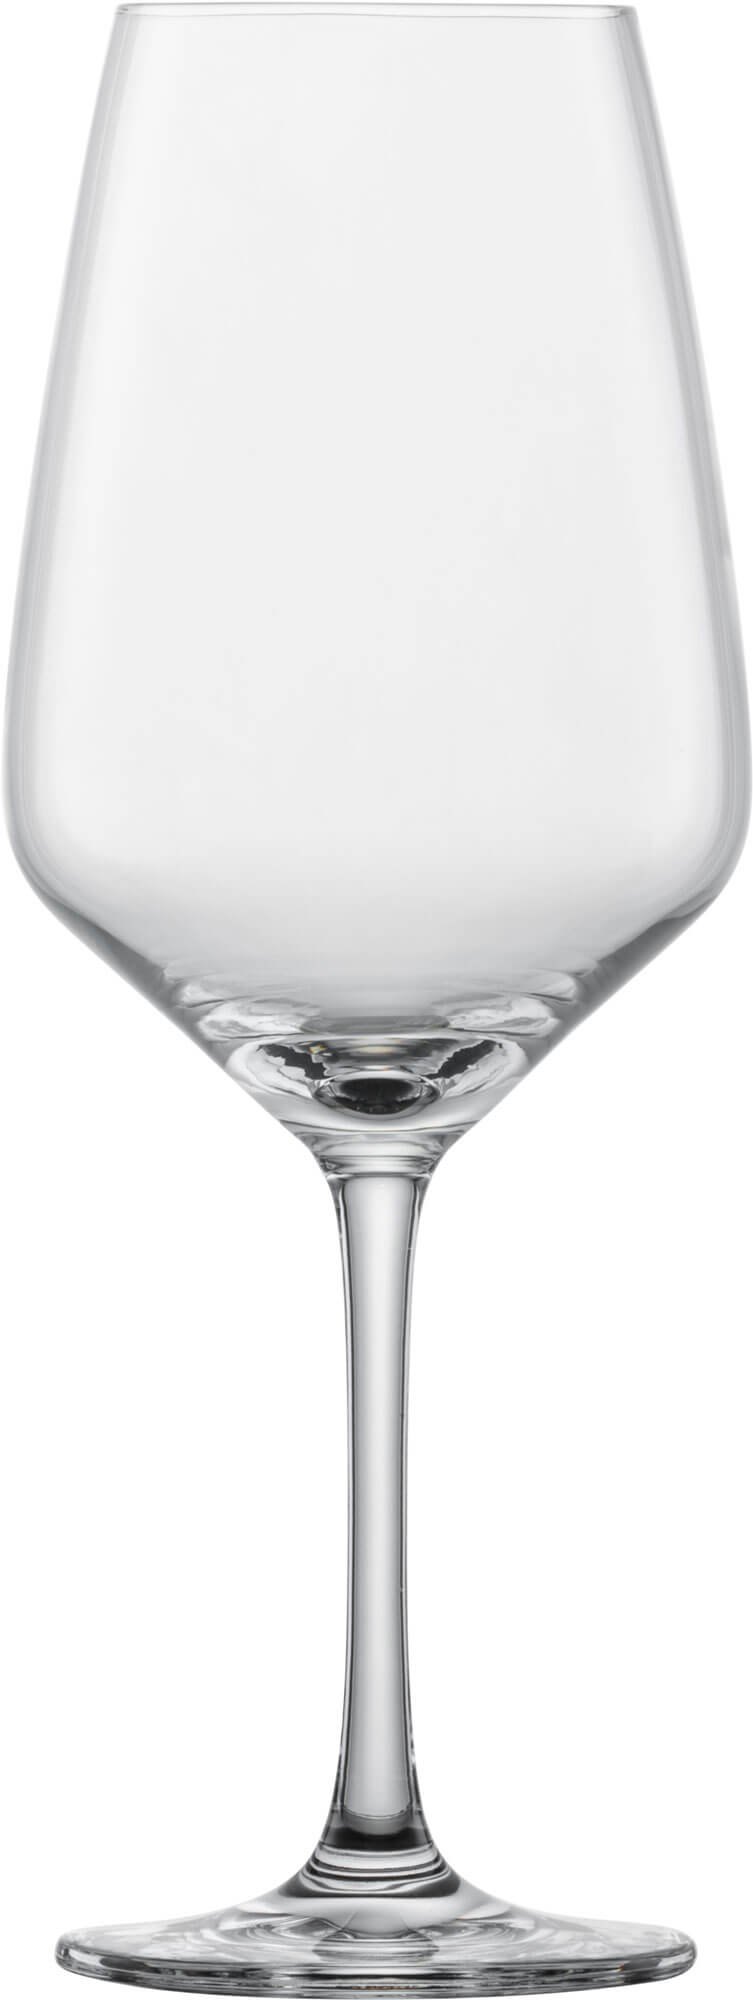 Rotweinglas Taste, Schott Zwiesel - 497ml, 0,2l Eiche (6 Stk.)